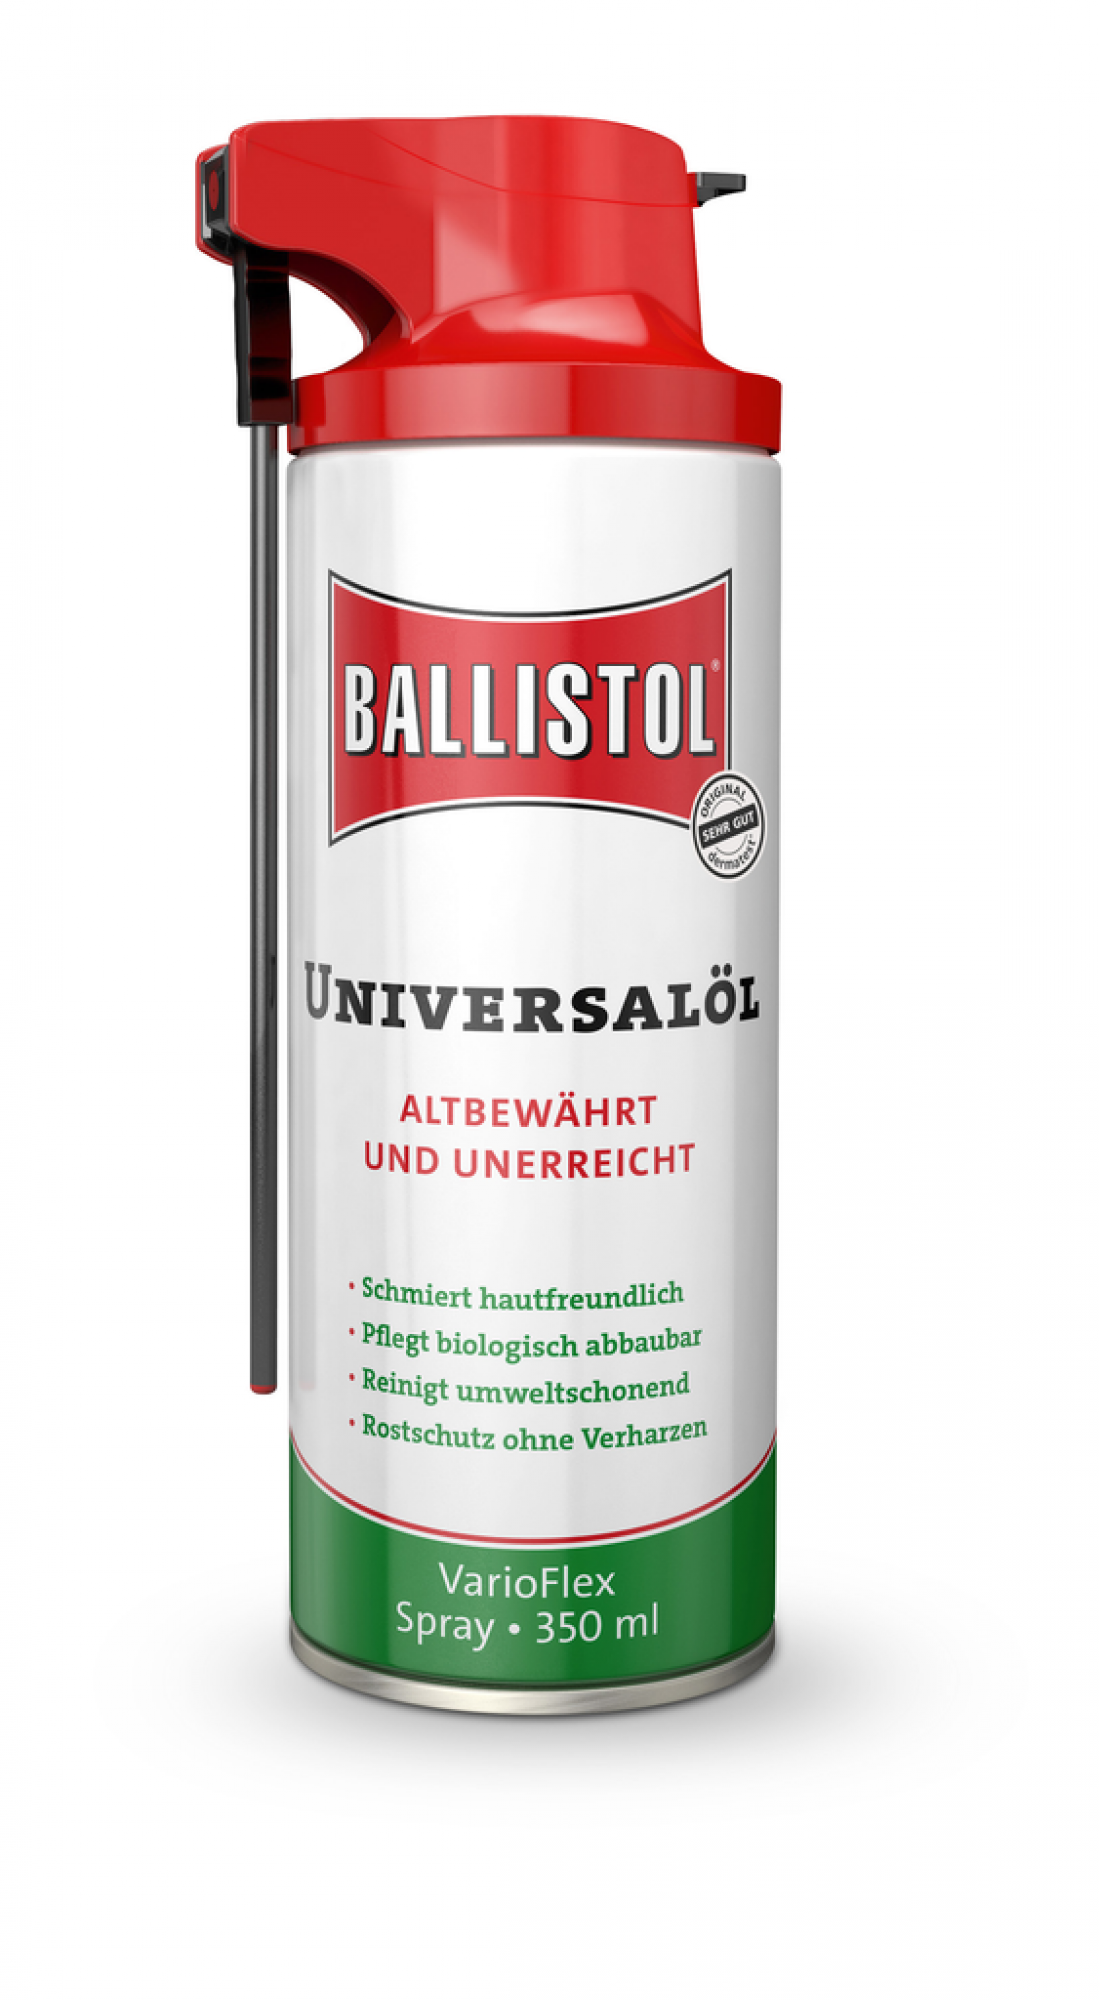 Ballistol Universal oil - Varioflex Spray 350 ml